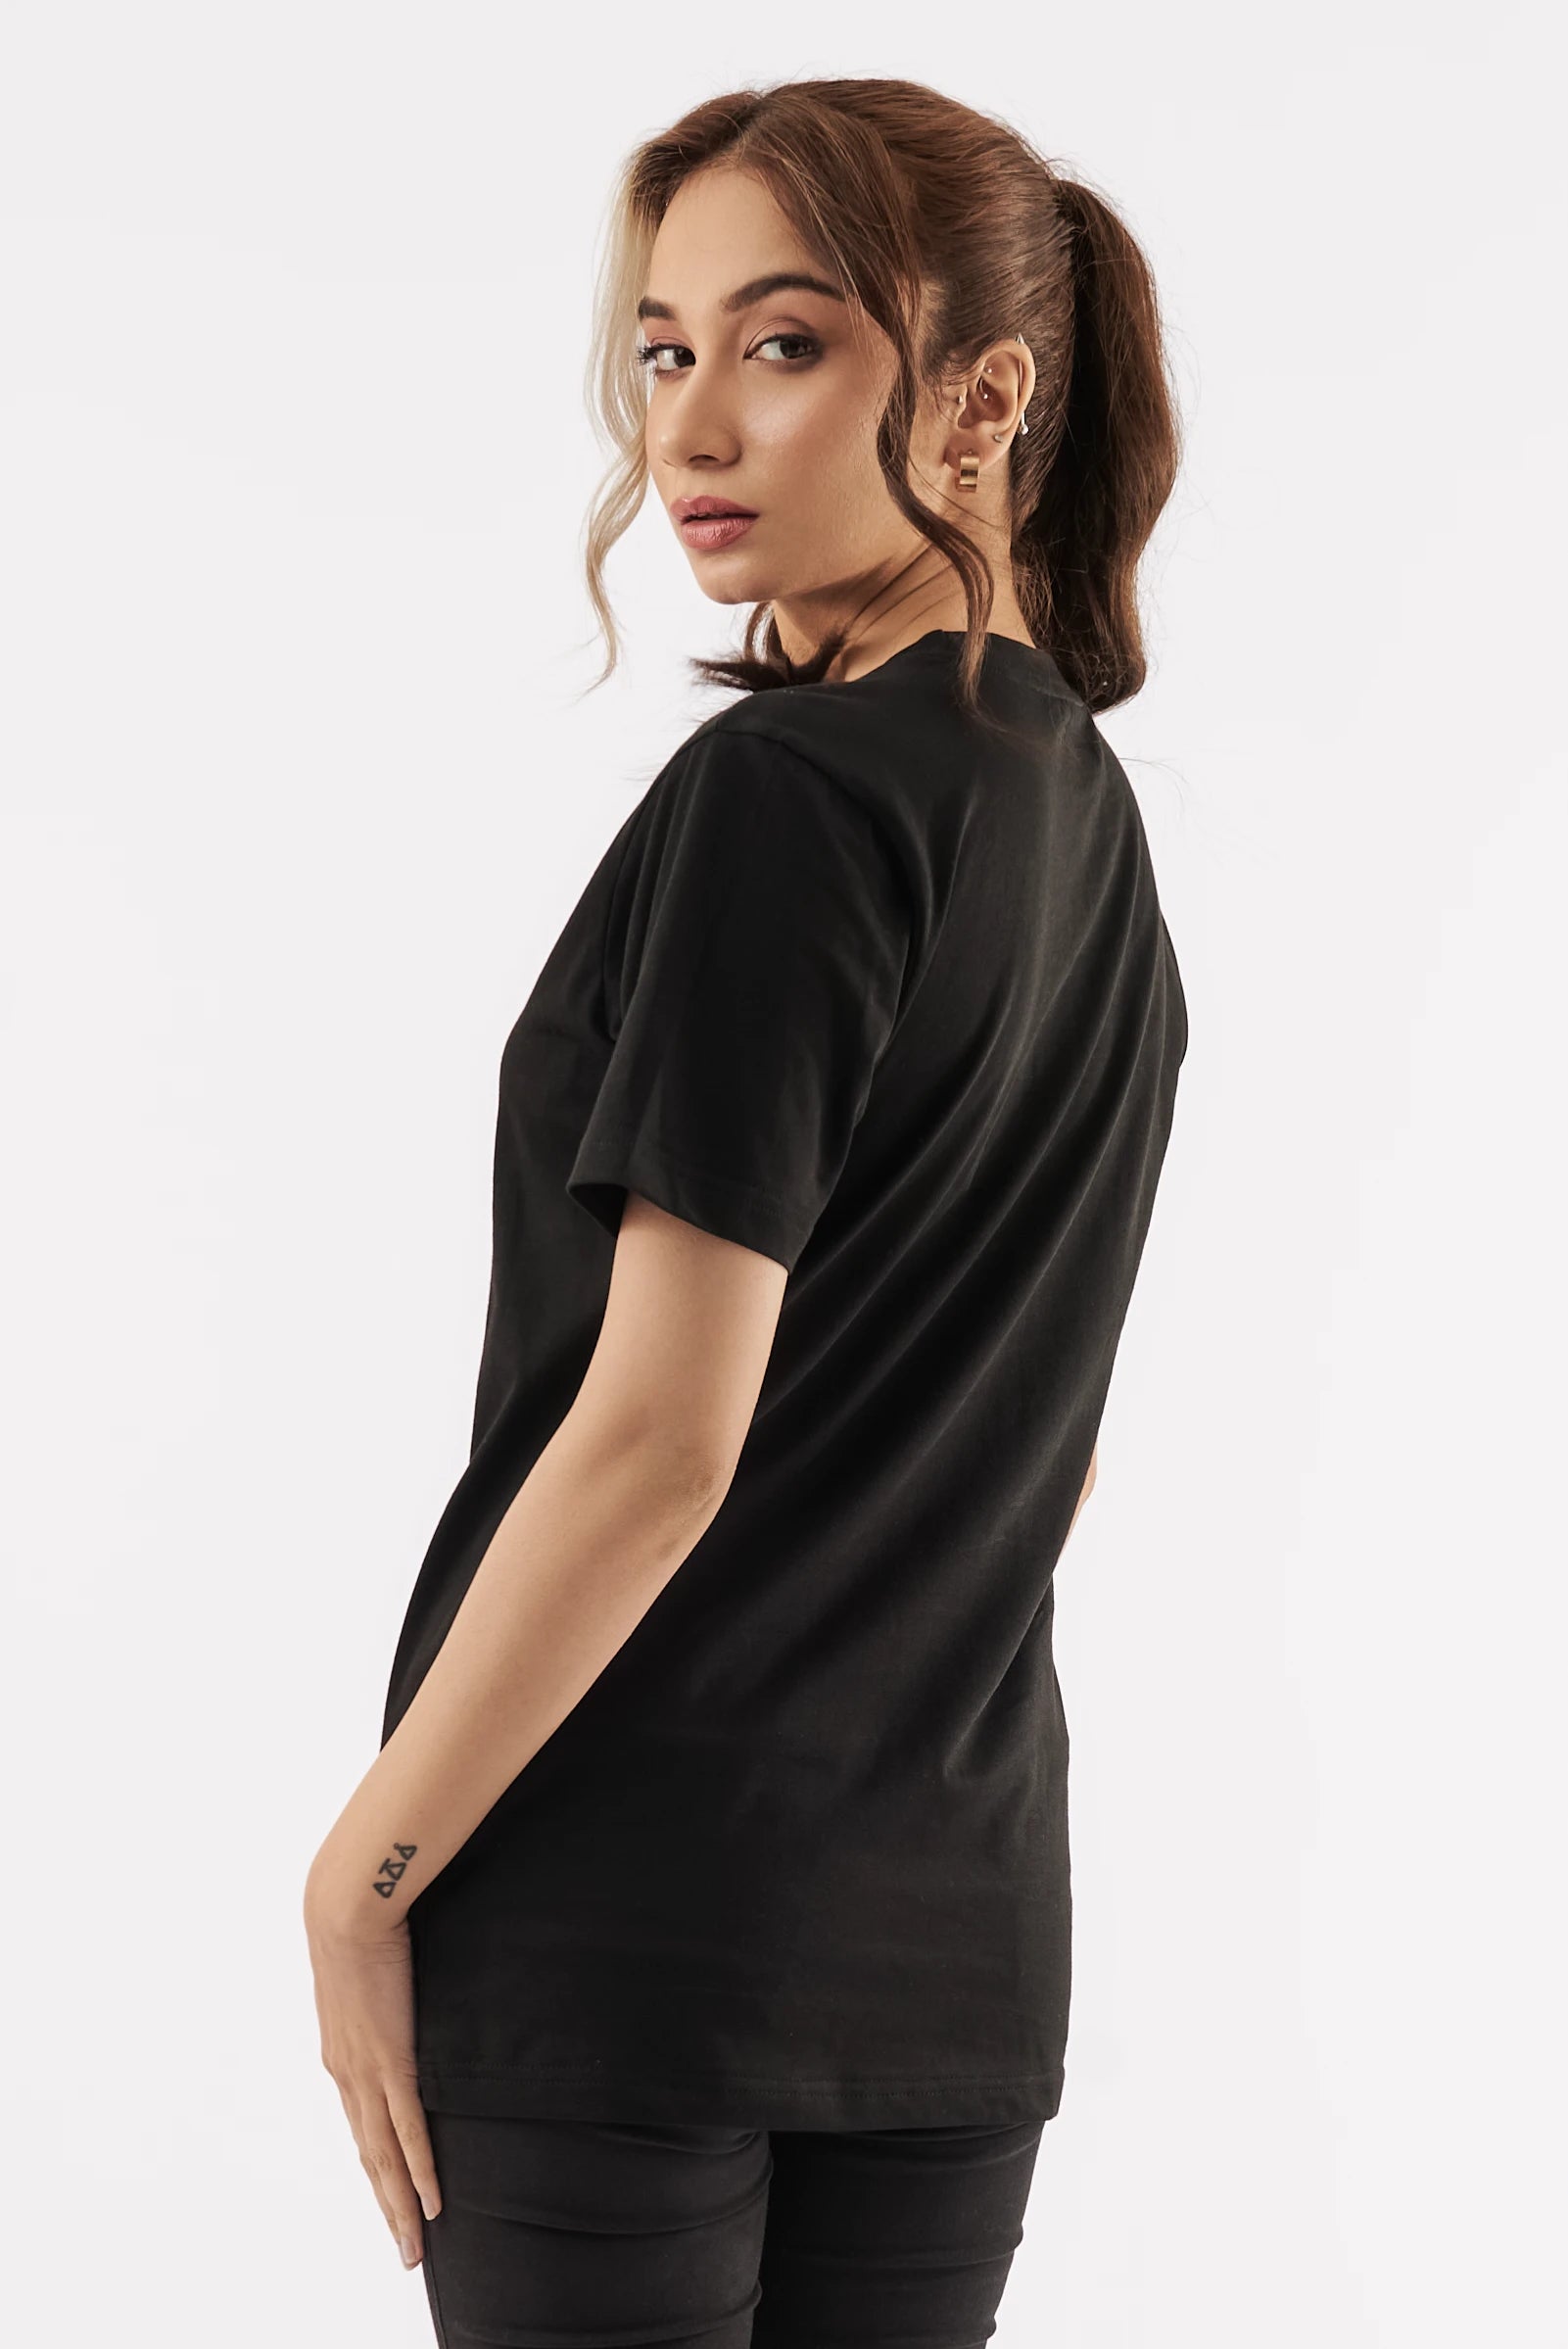 Women's Creative Empowered T-Shirt Black